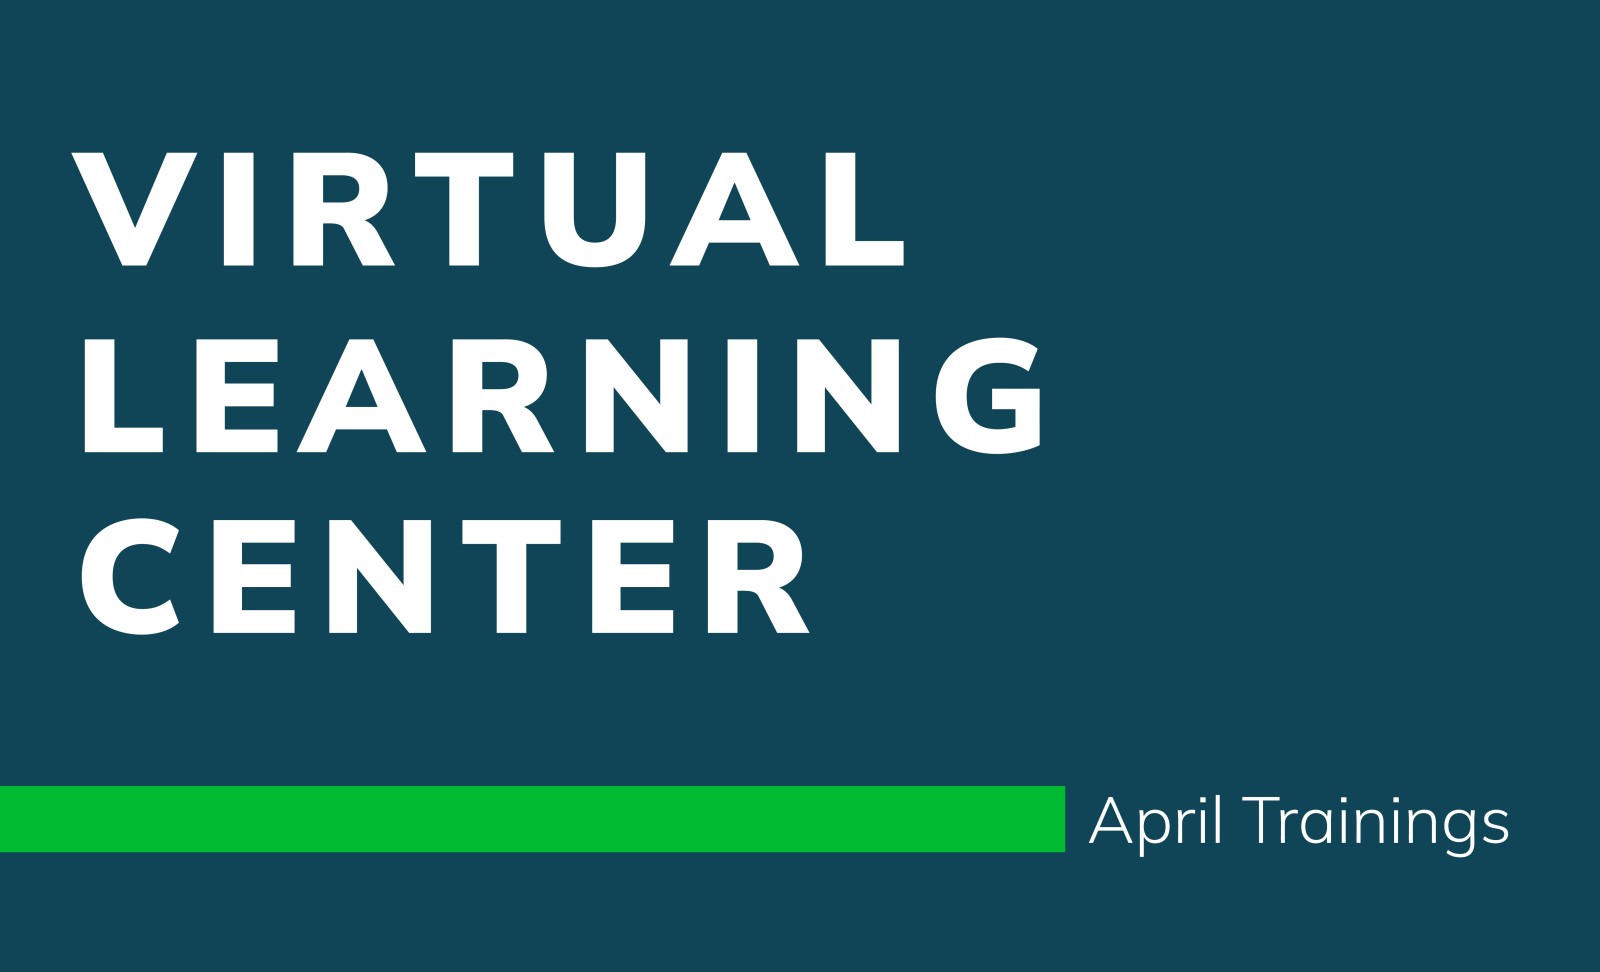 Virtual Learning Center April Trainings